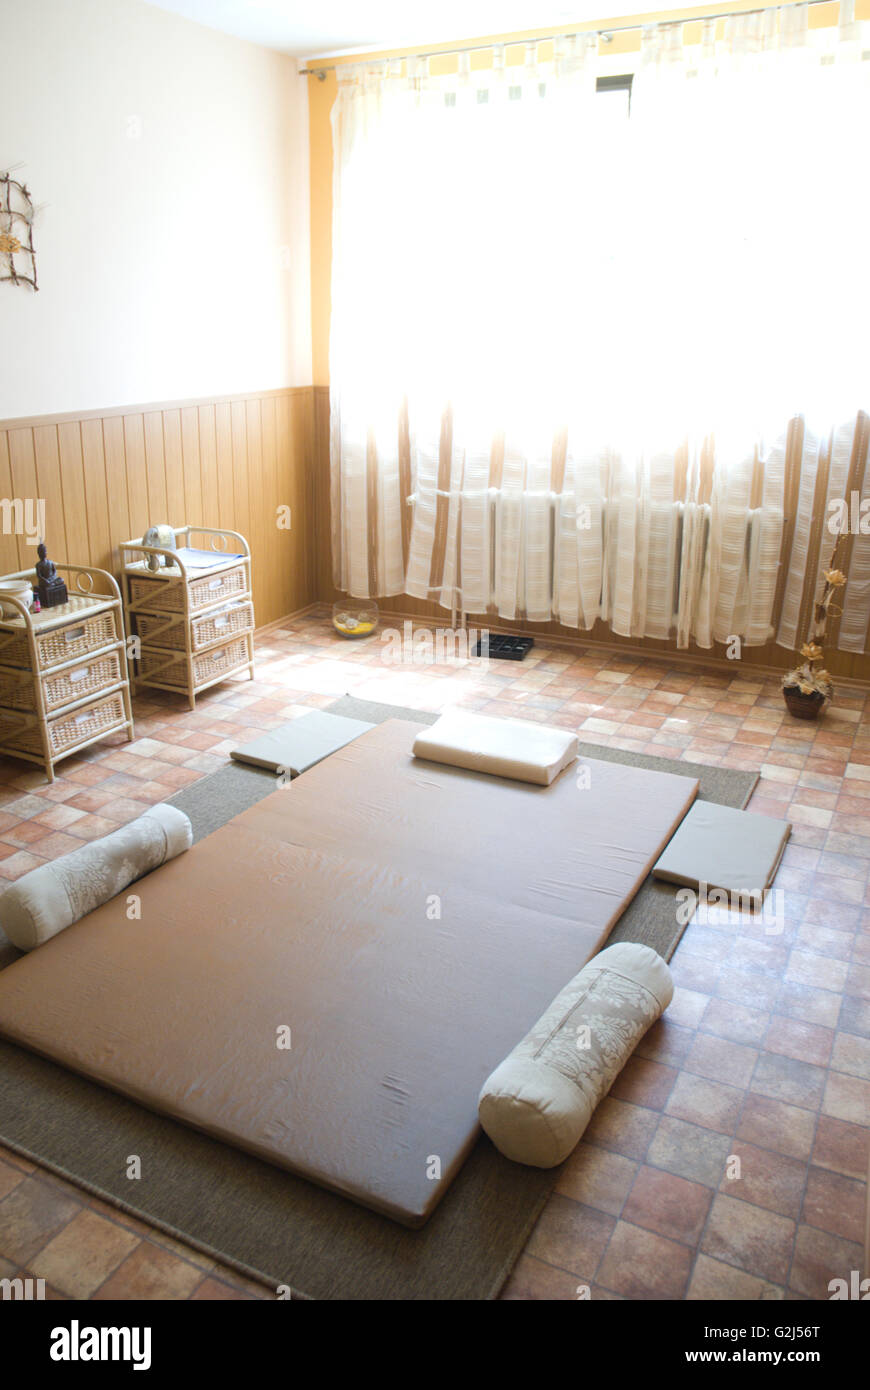 Shiatsu Massage Pad on Floor Stock Photo